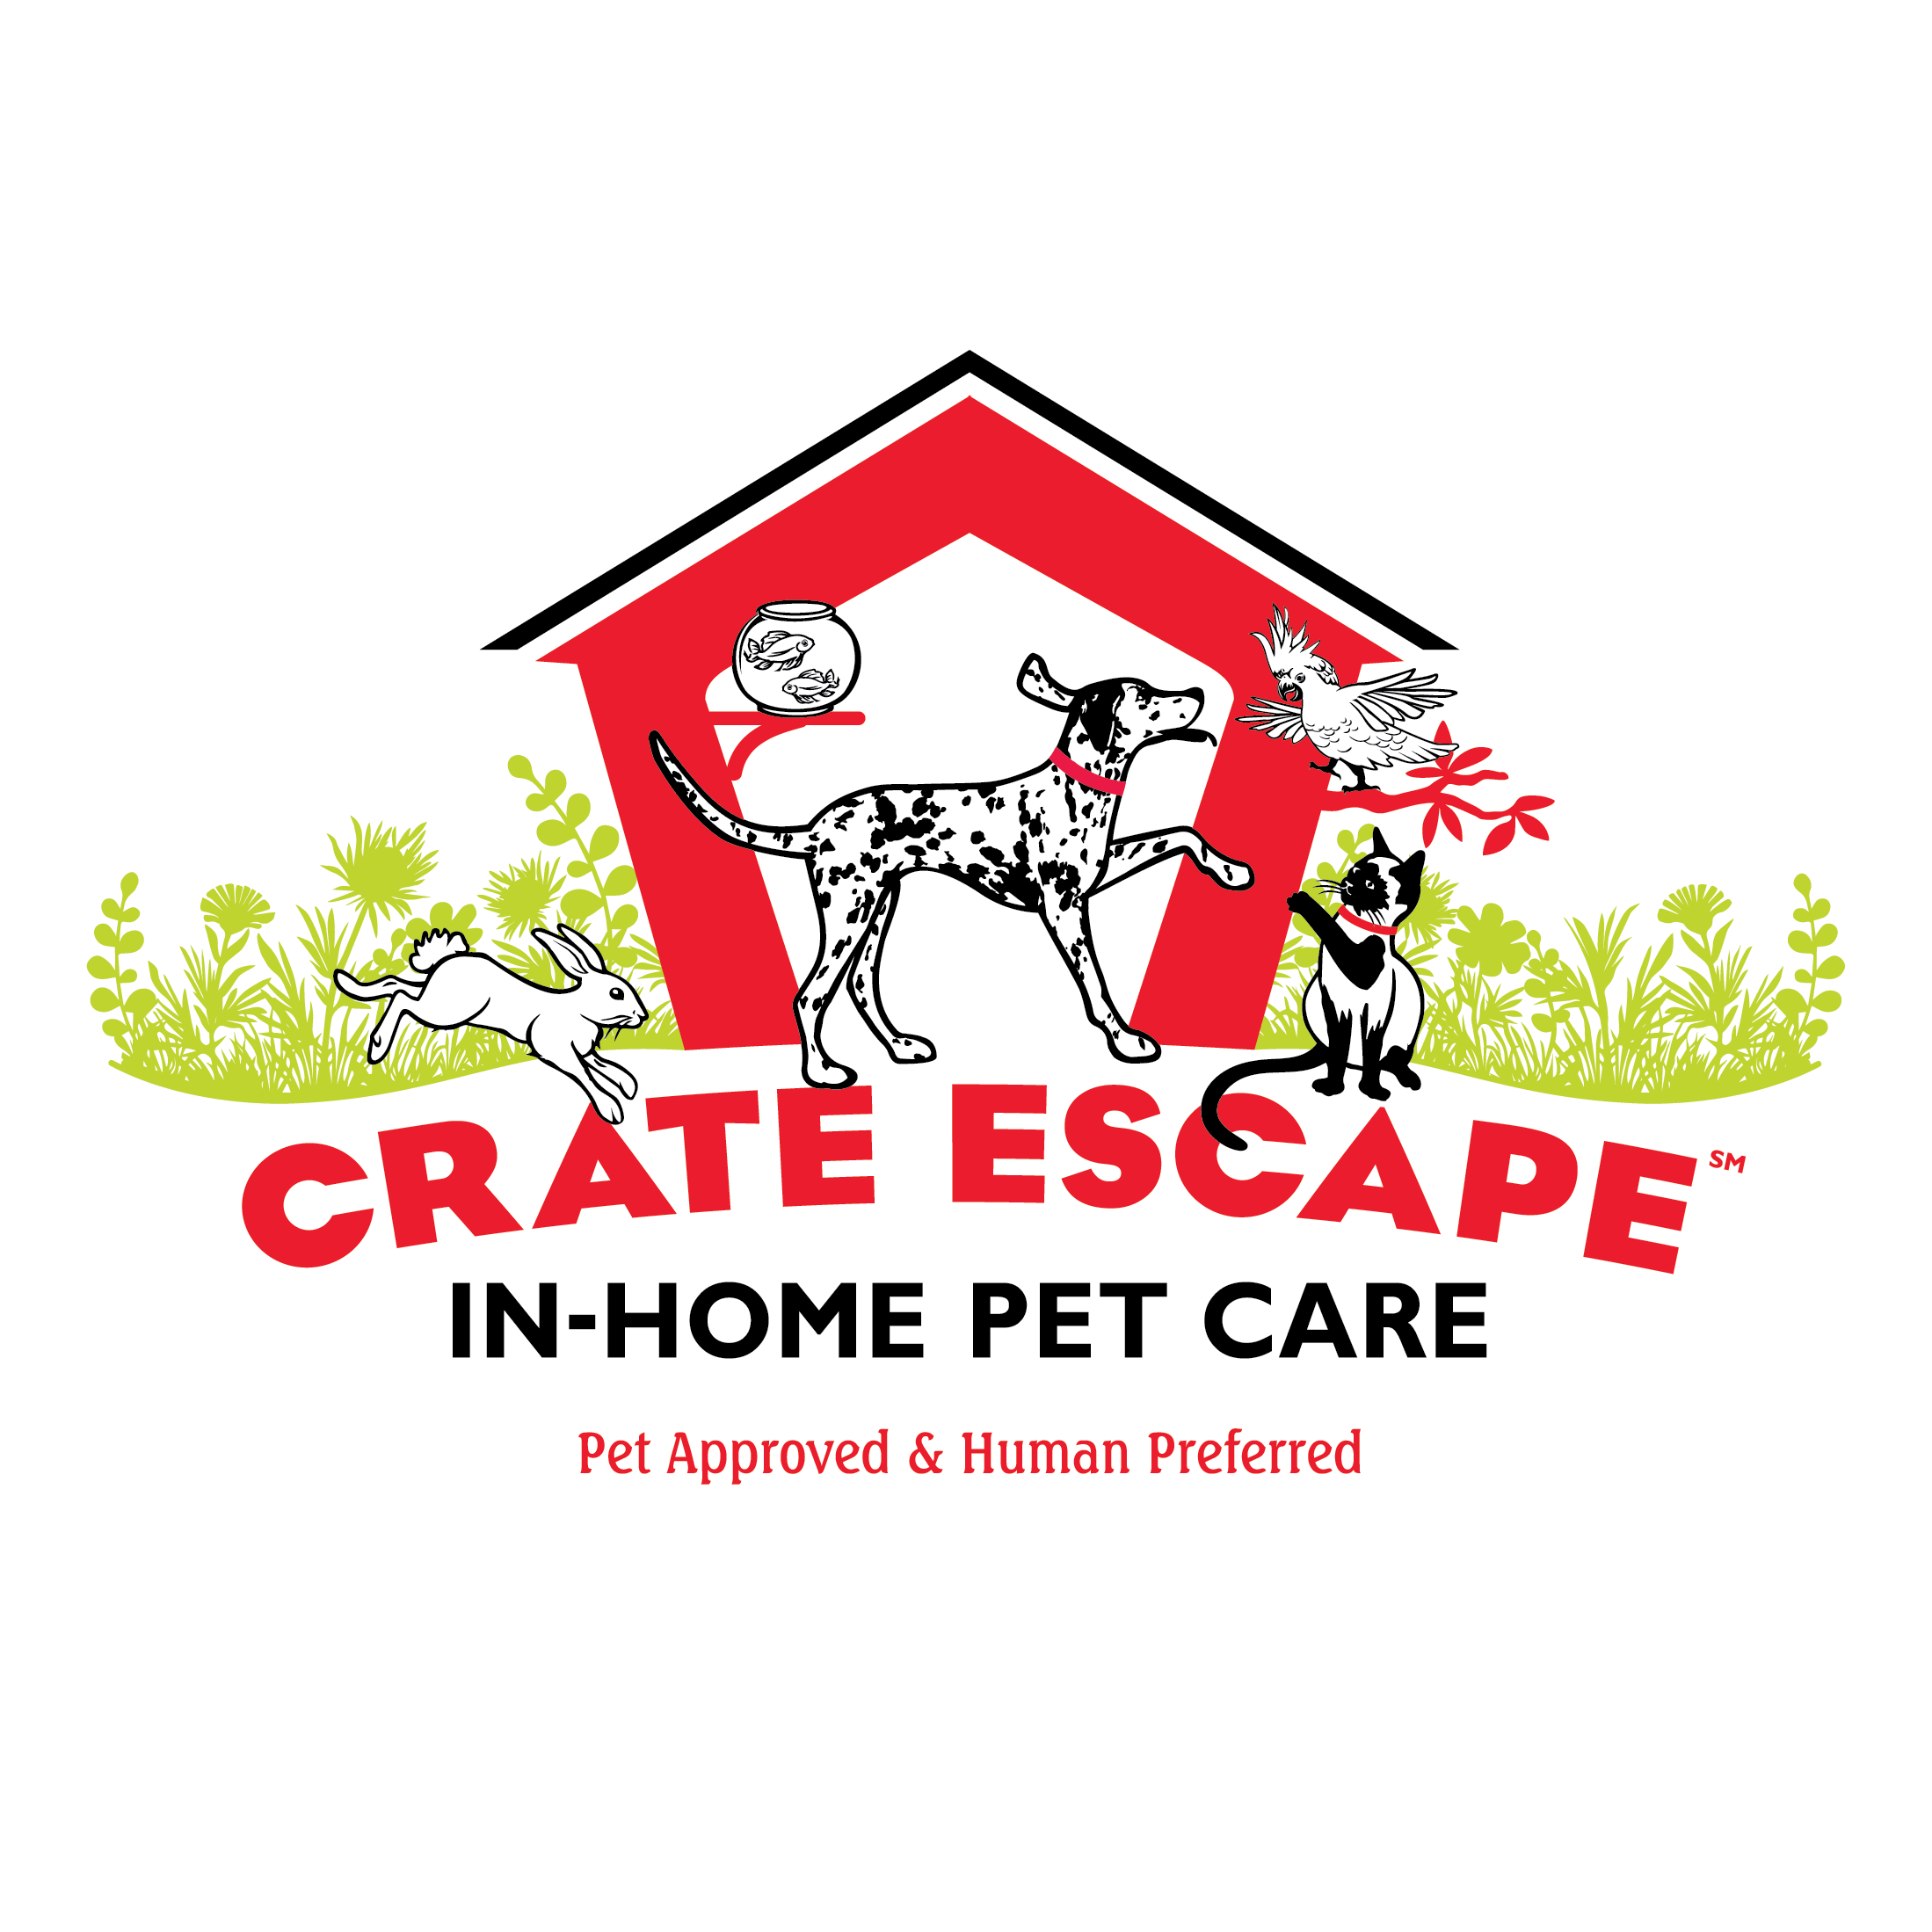 Crate Escape Pet Care